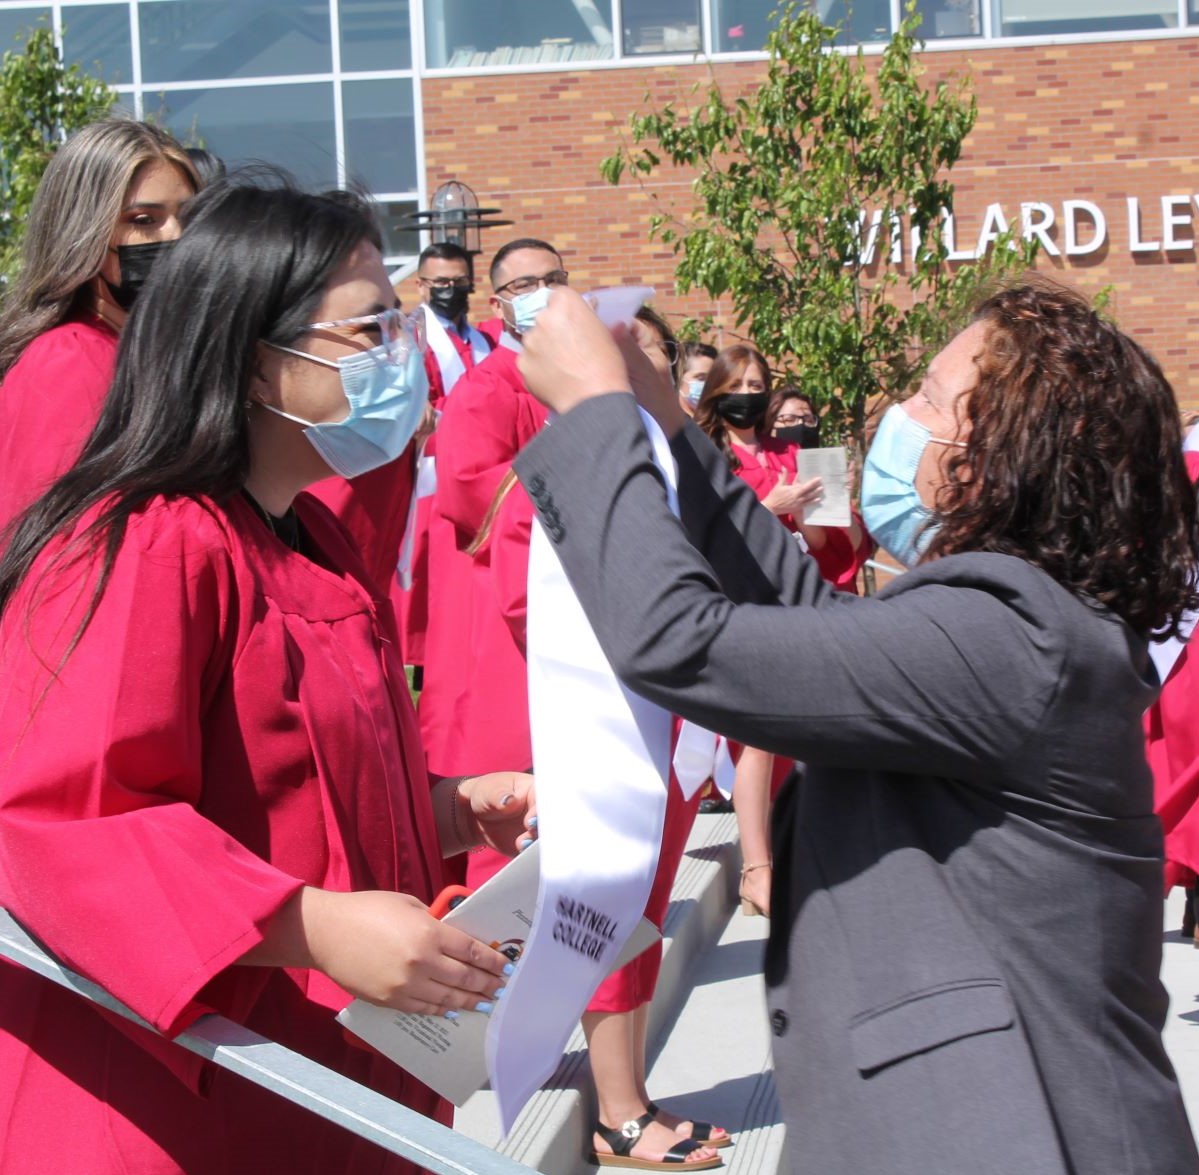 Vocational Nursing faculty puts stole around new graduate.